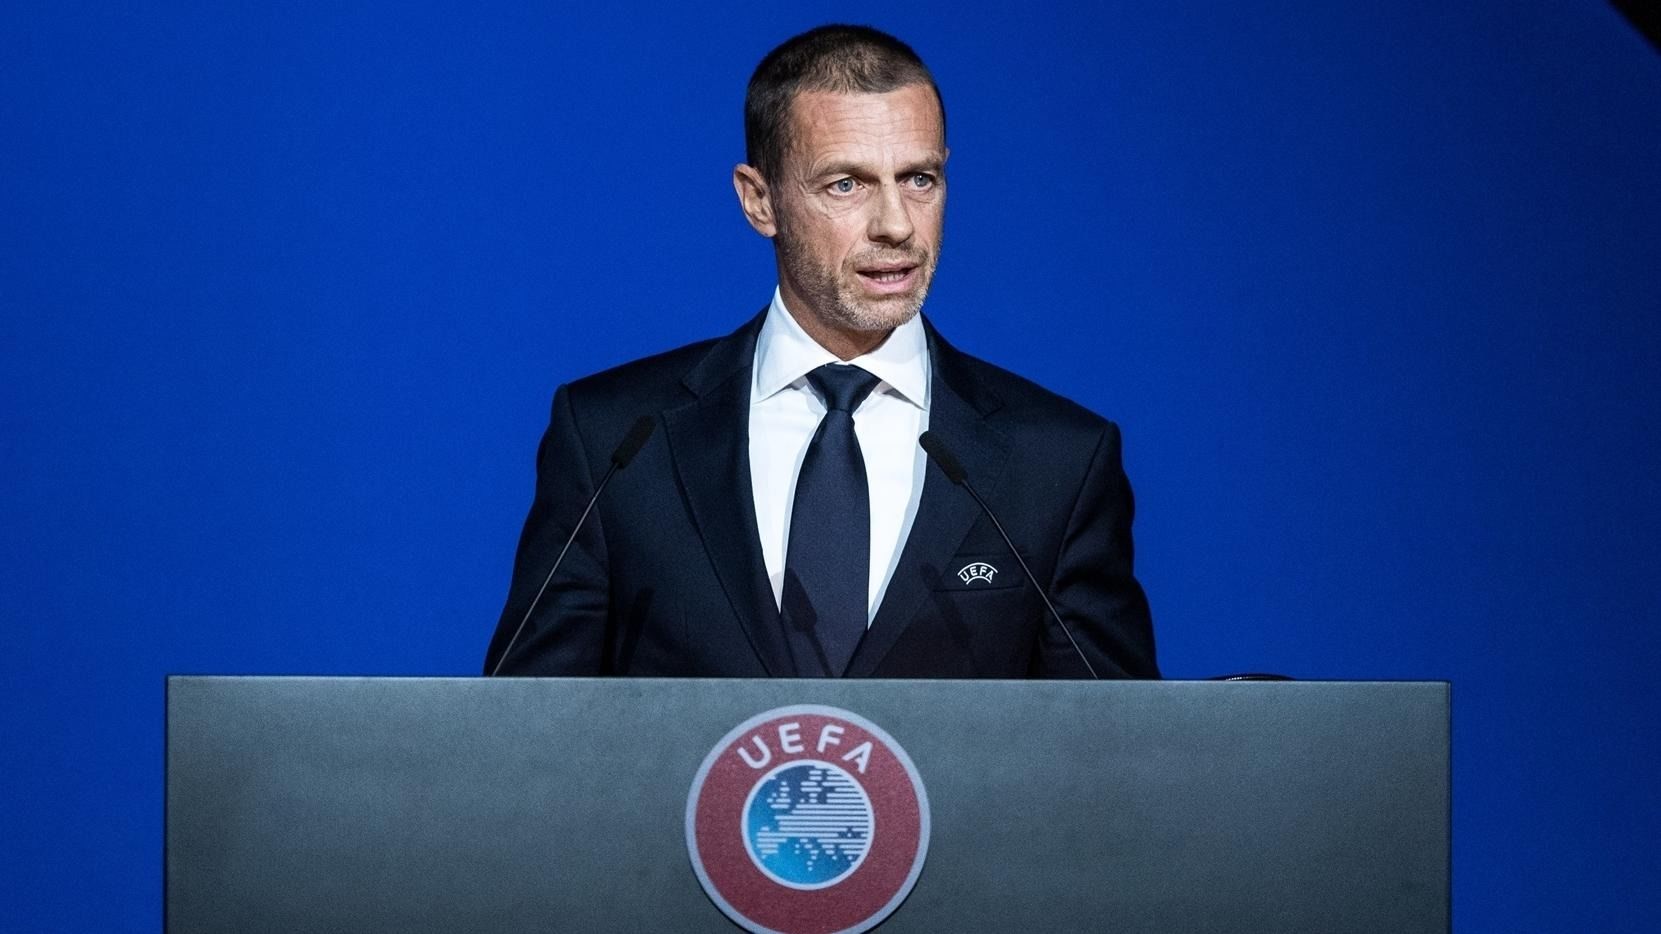 Aleksander Сeferin Announces Stepping Down As UEFA President In 2027